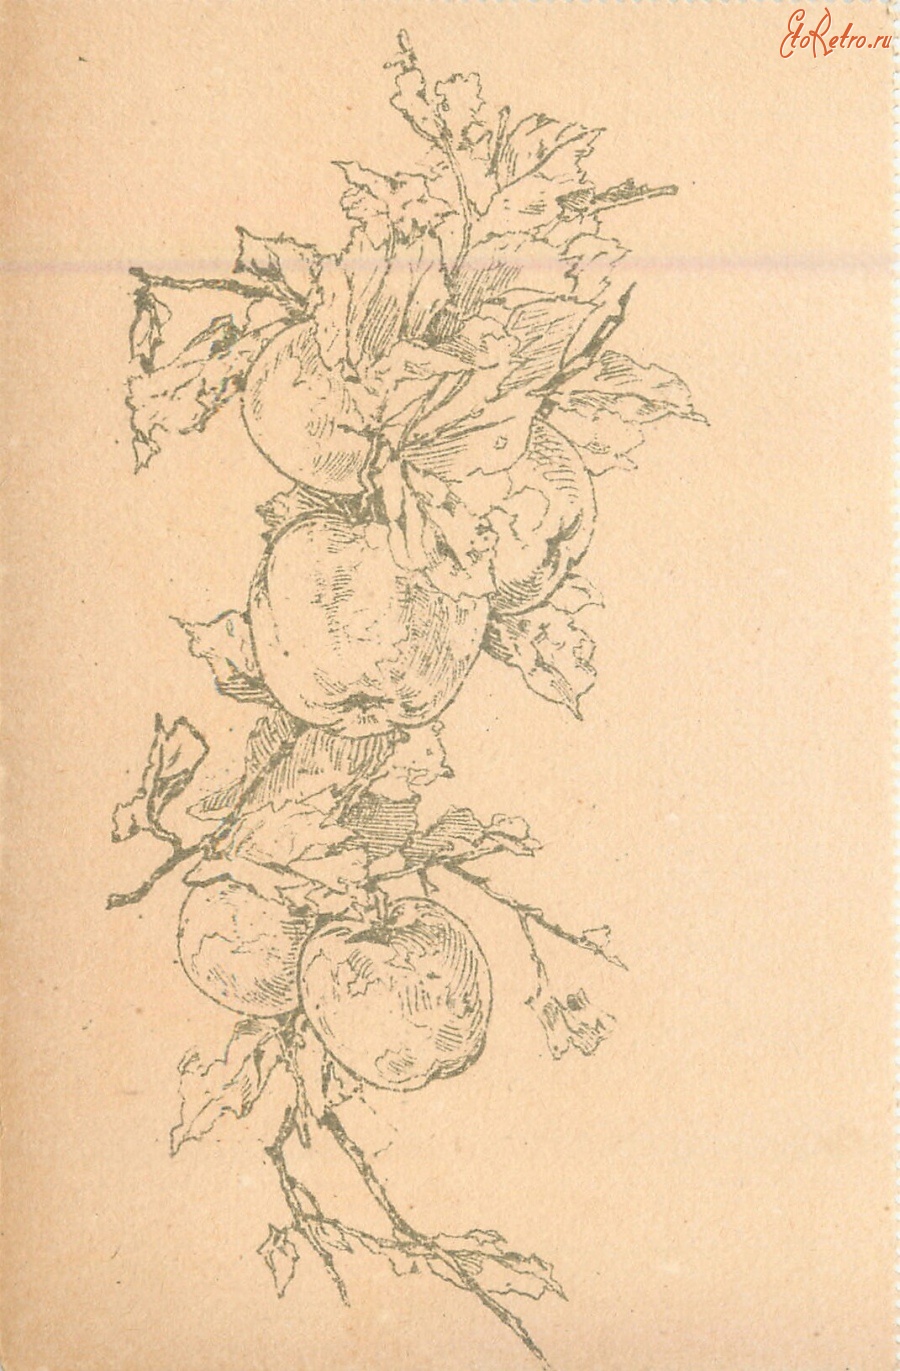 Ретро открытки - Натюрморт Ветка яблони